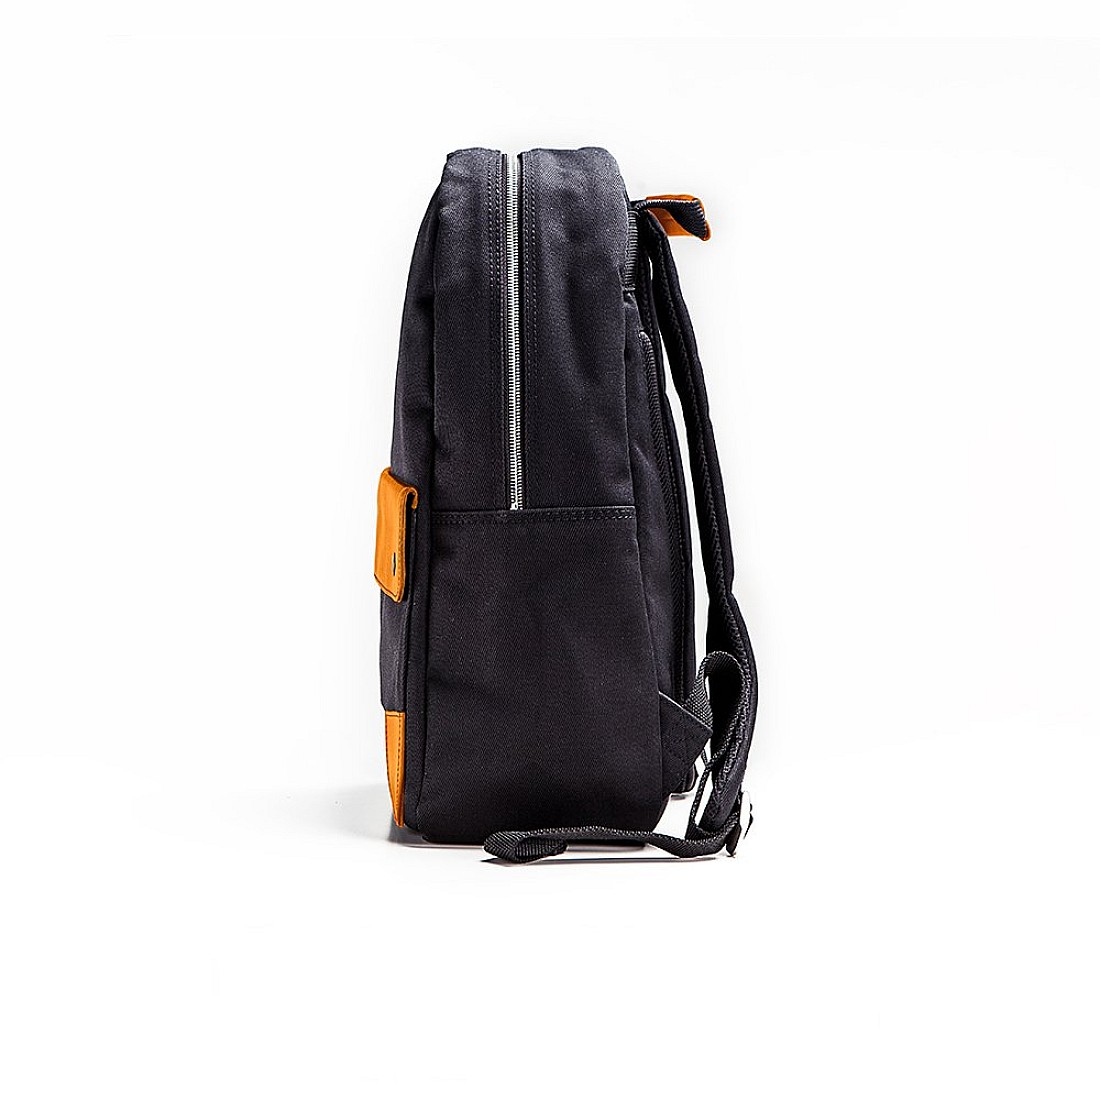 Venque Classic Black Backpack